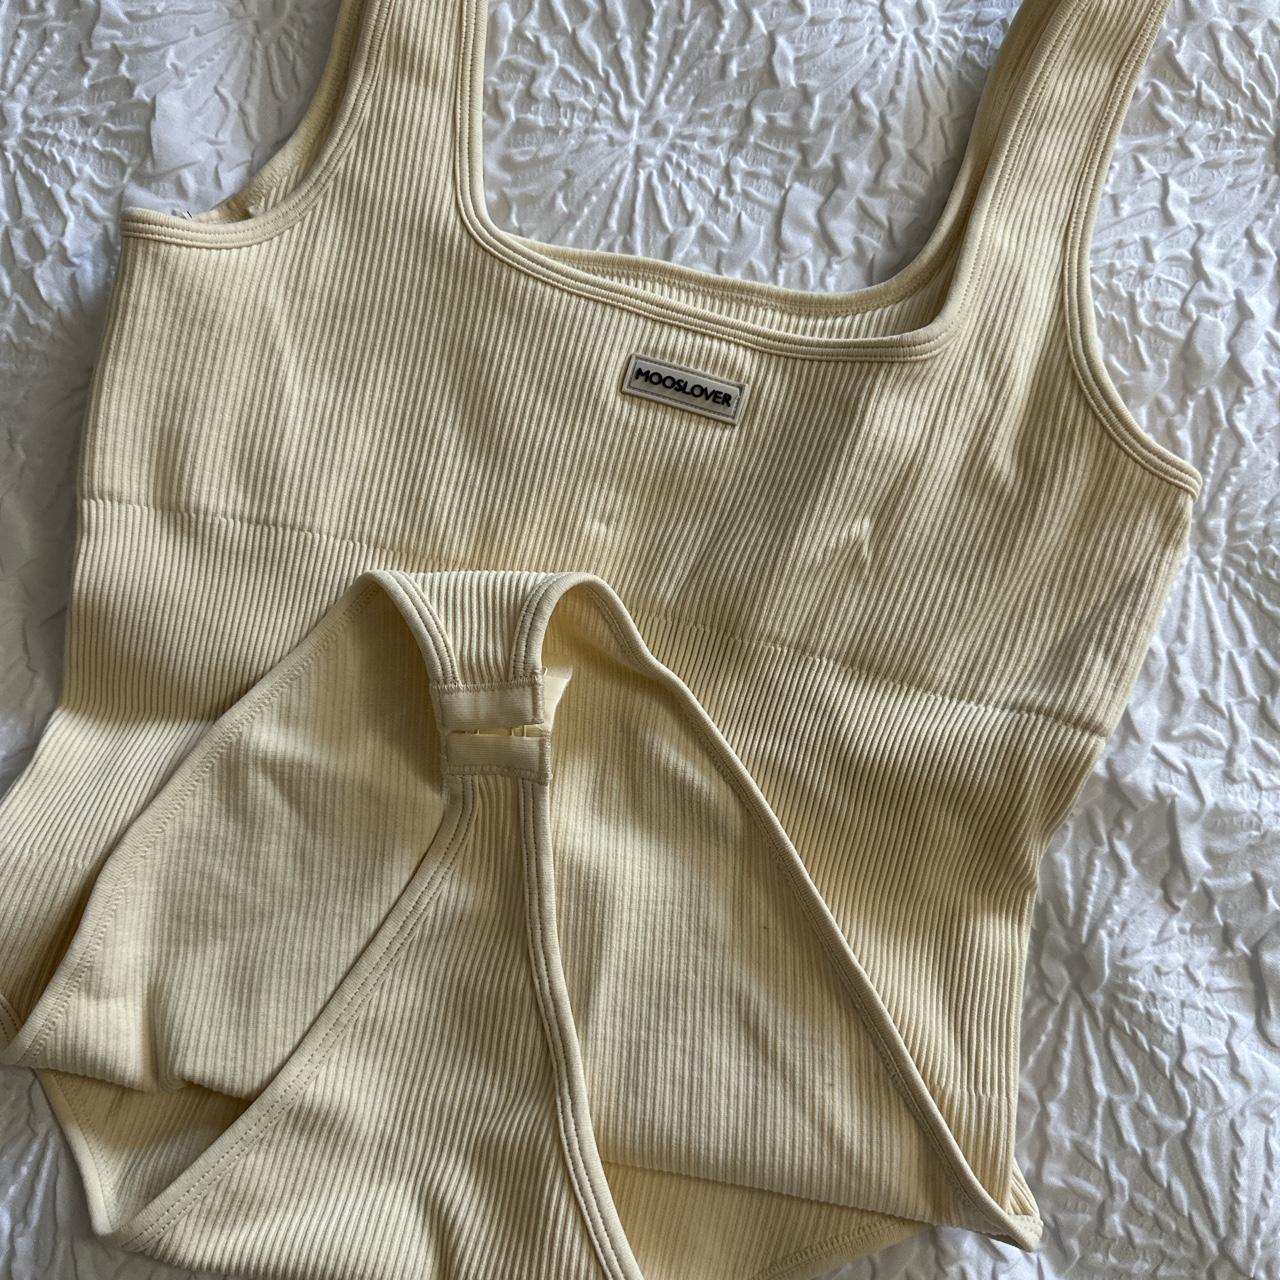 Mooslover bodysuit in shade beige/off white. Gorge - Depop